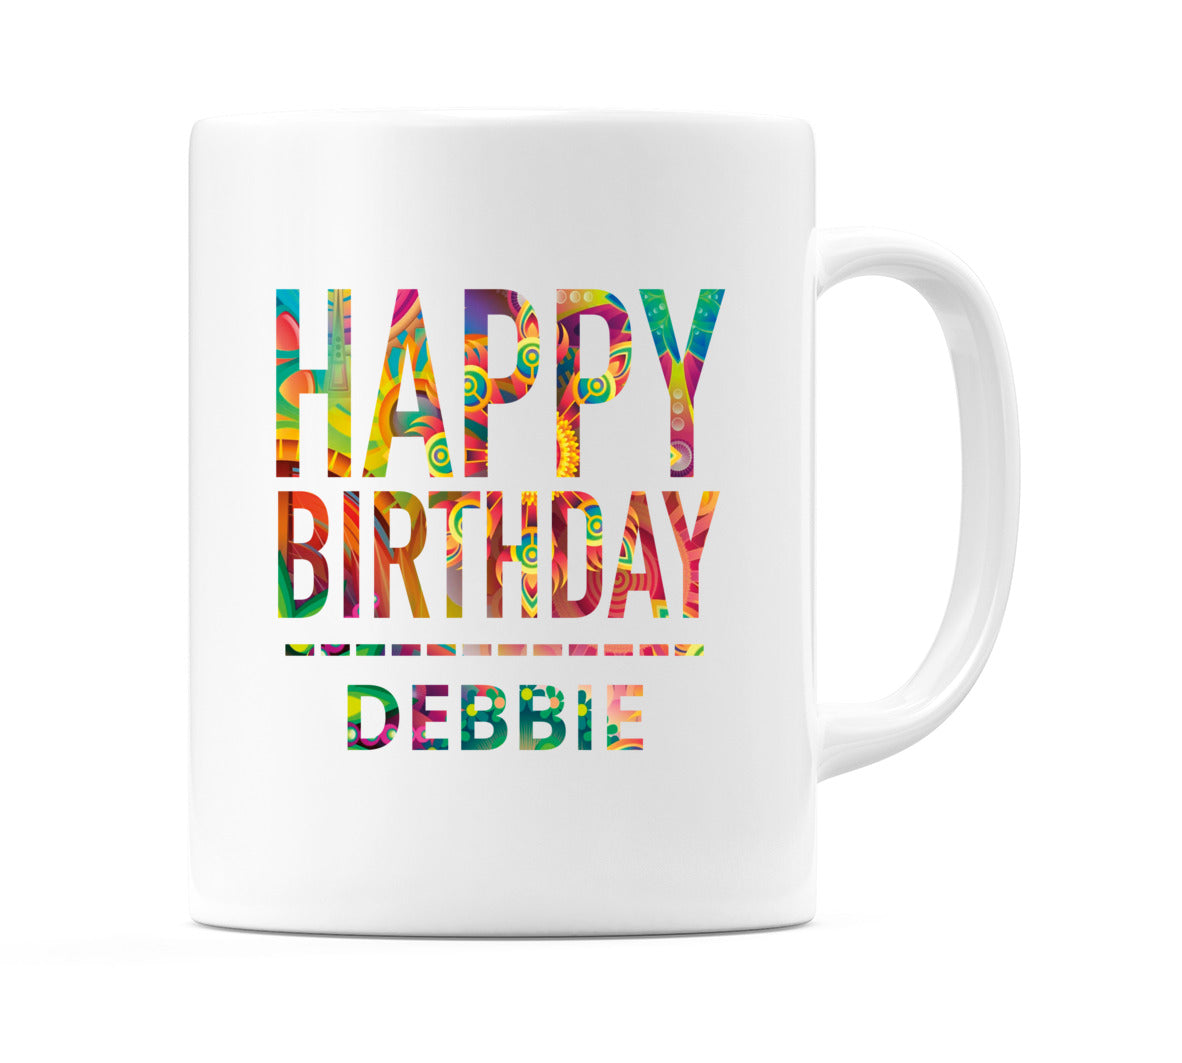 Happy Birthday Debbie (Tie Dye Effect) Mug Cup by WeDoMugs